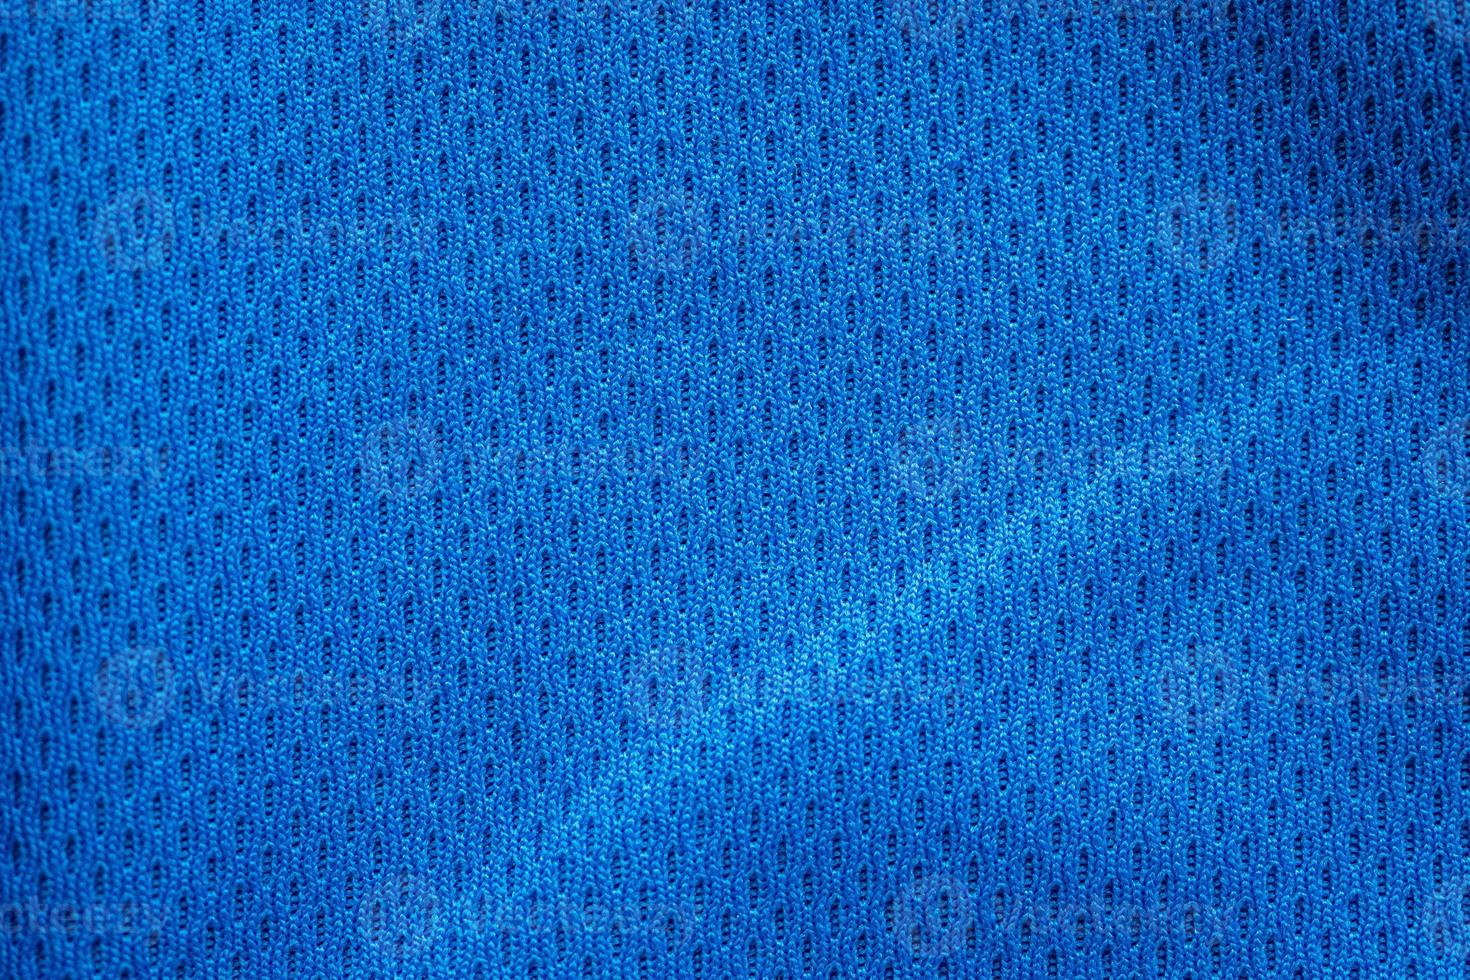 maillot de football de vêtements de sport en tissu bleu avec fond de texture en maille d'air photo